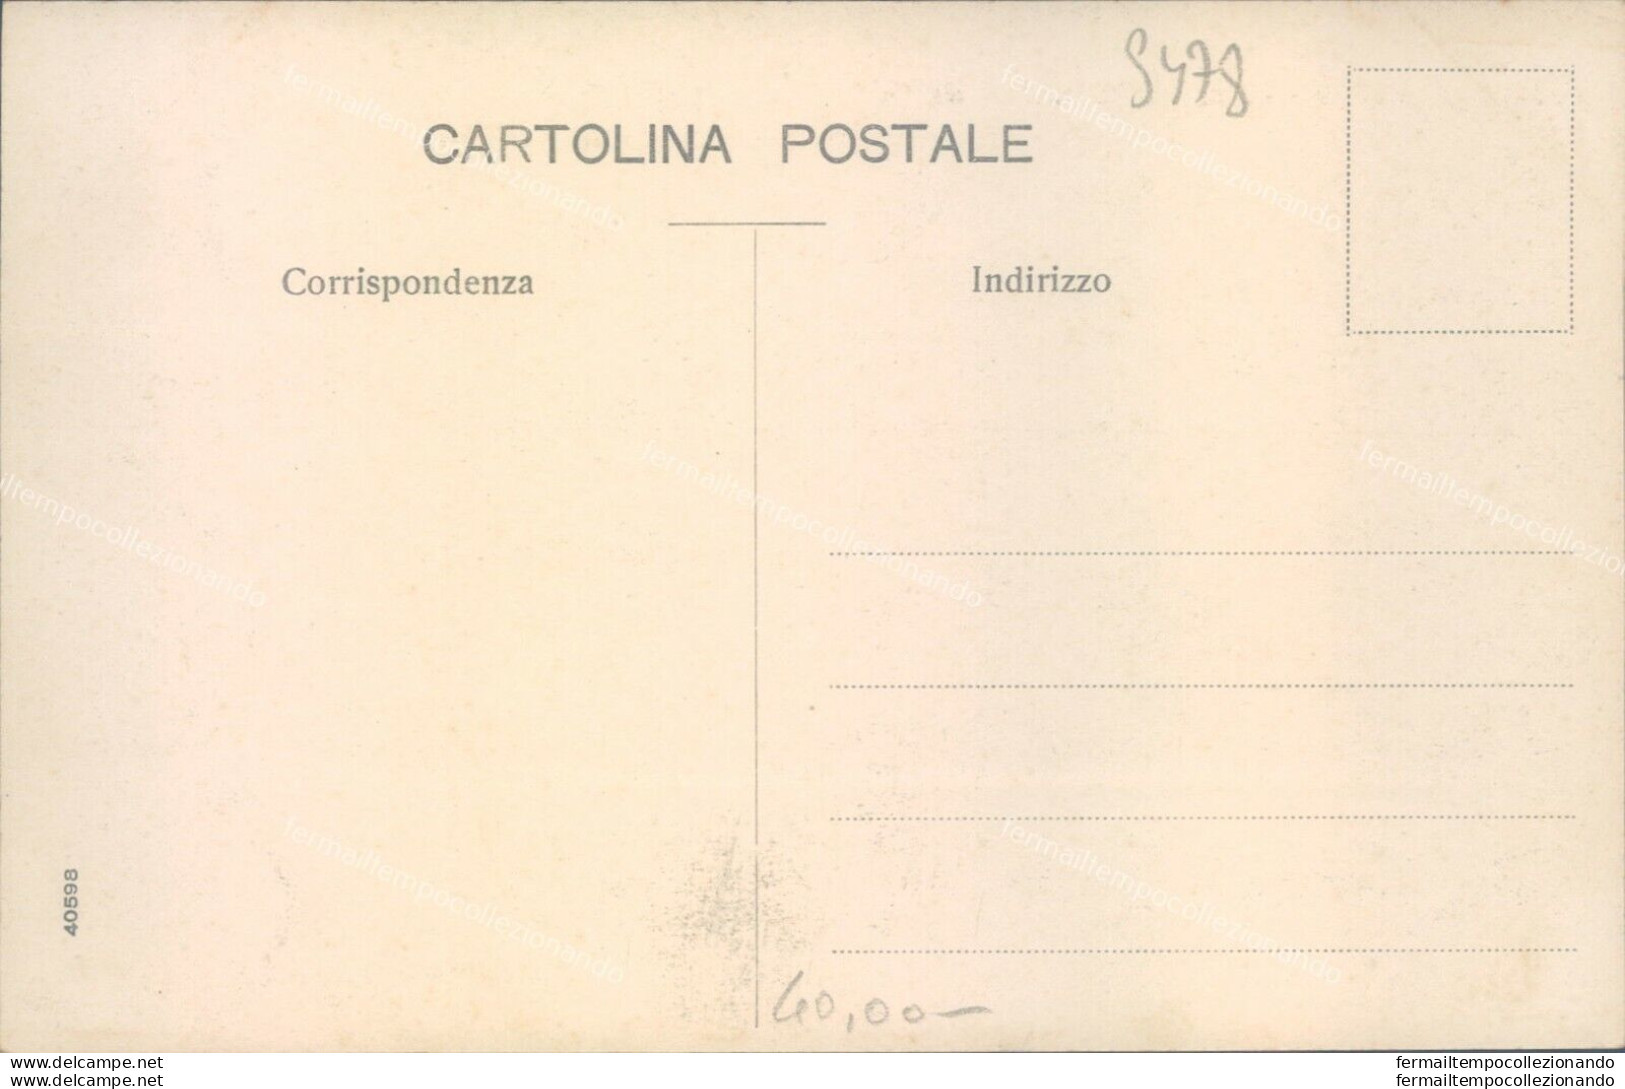 S478 Cartolina Vittoria Piazza Vittorio Emanuele Provincia Di Ragusa - Ragusa